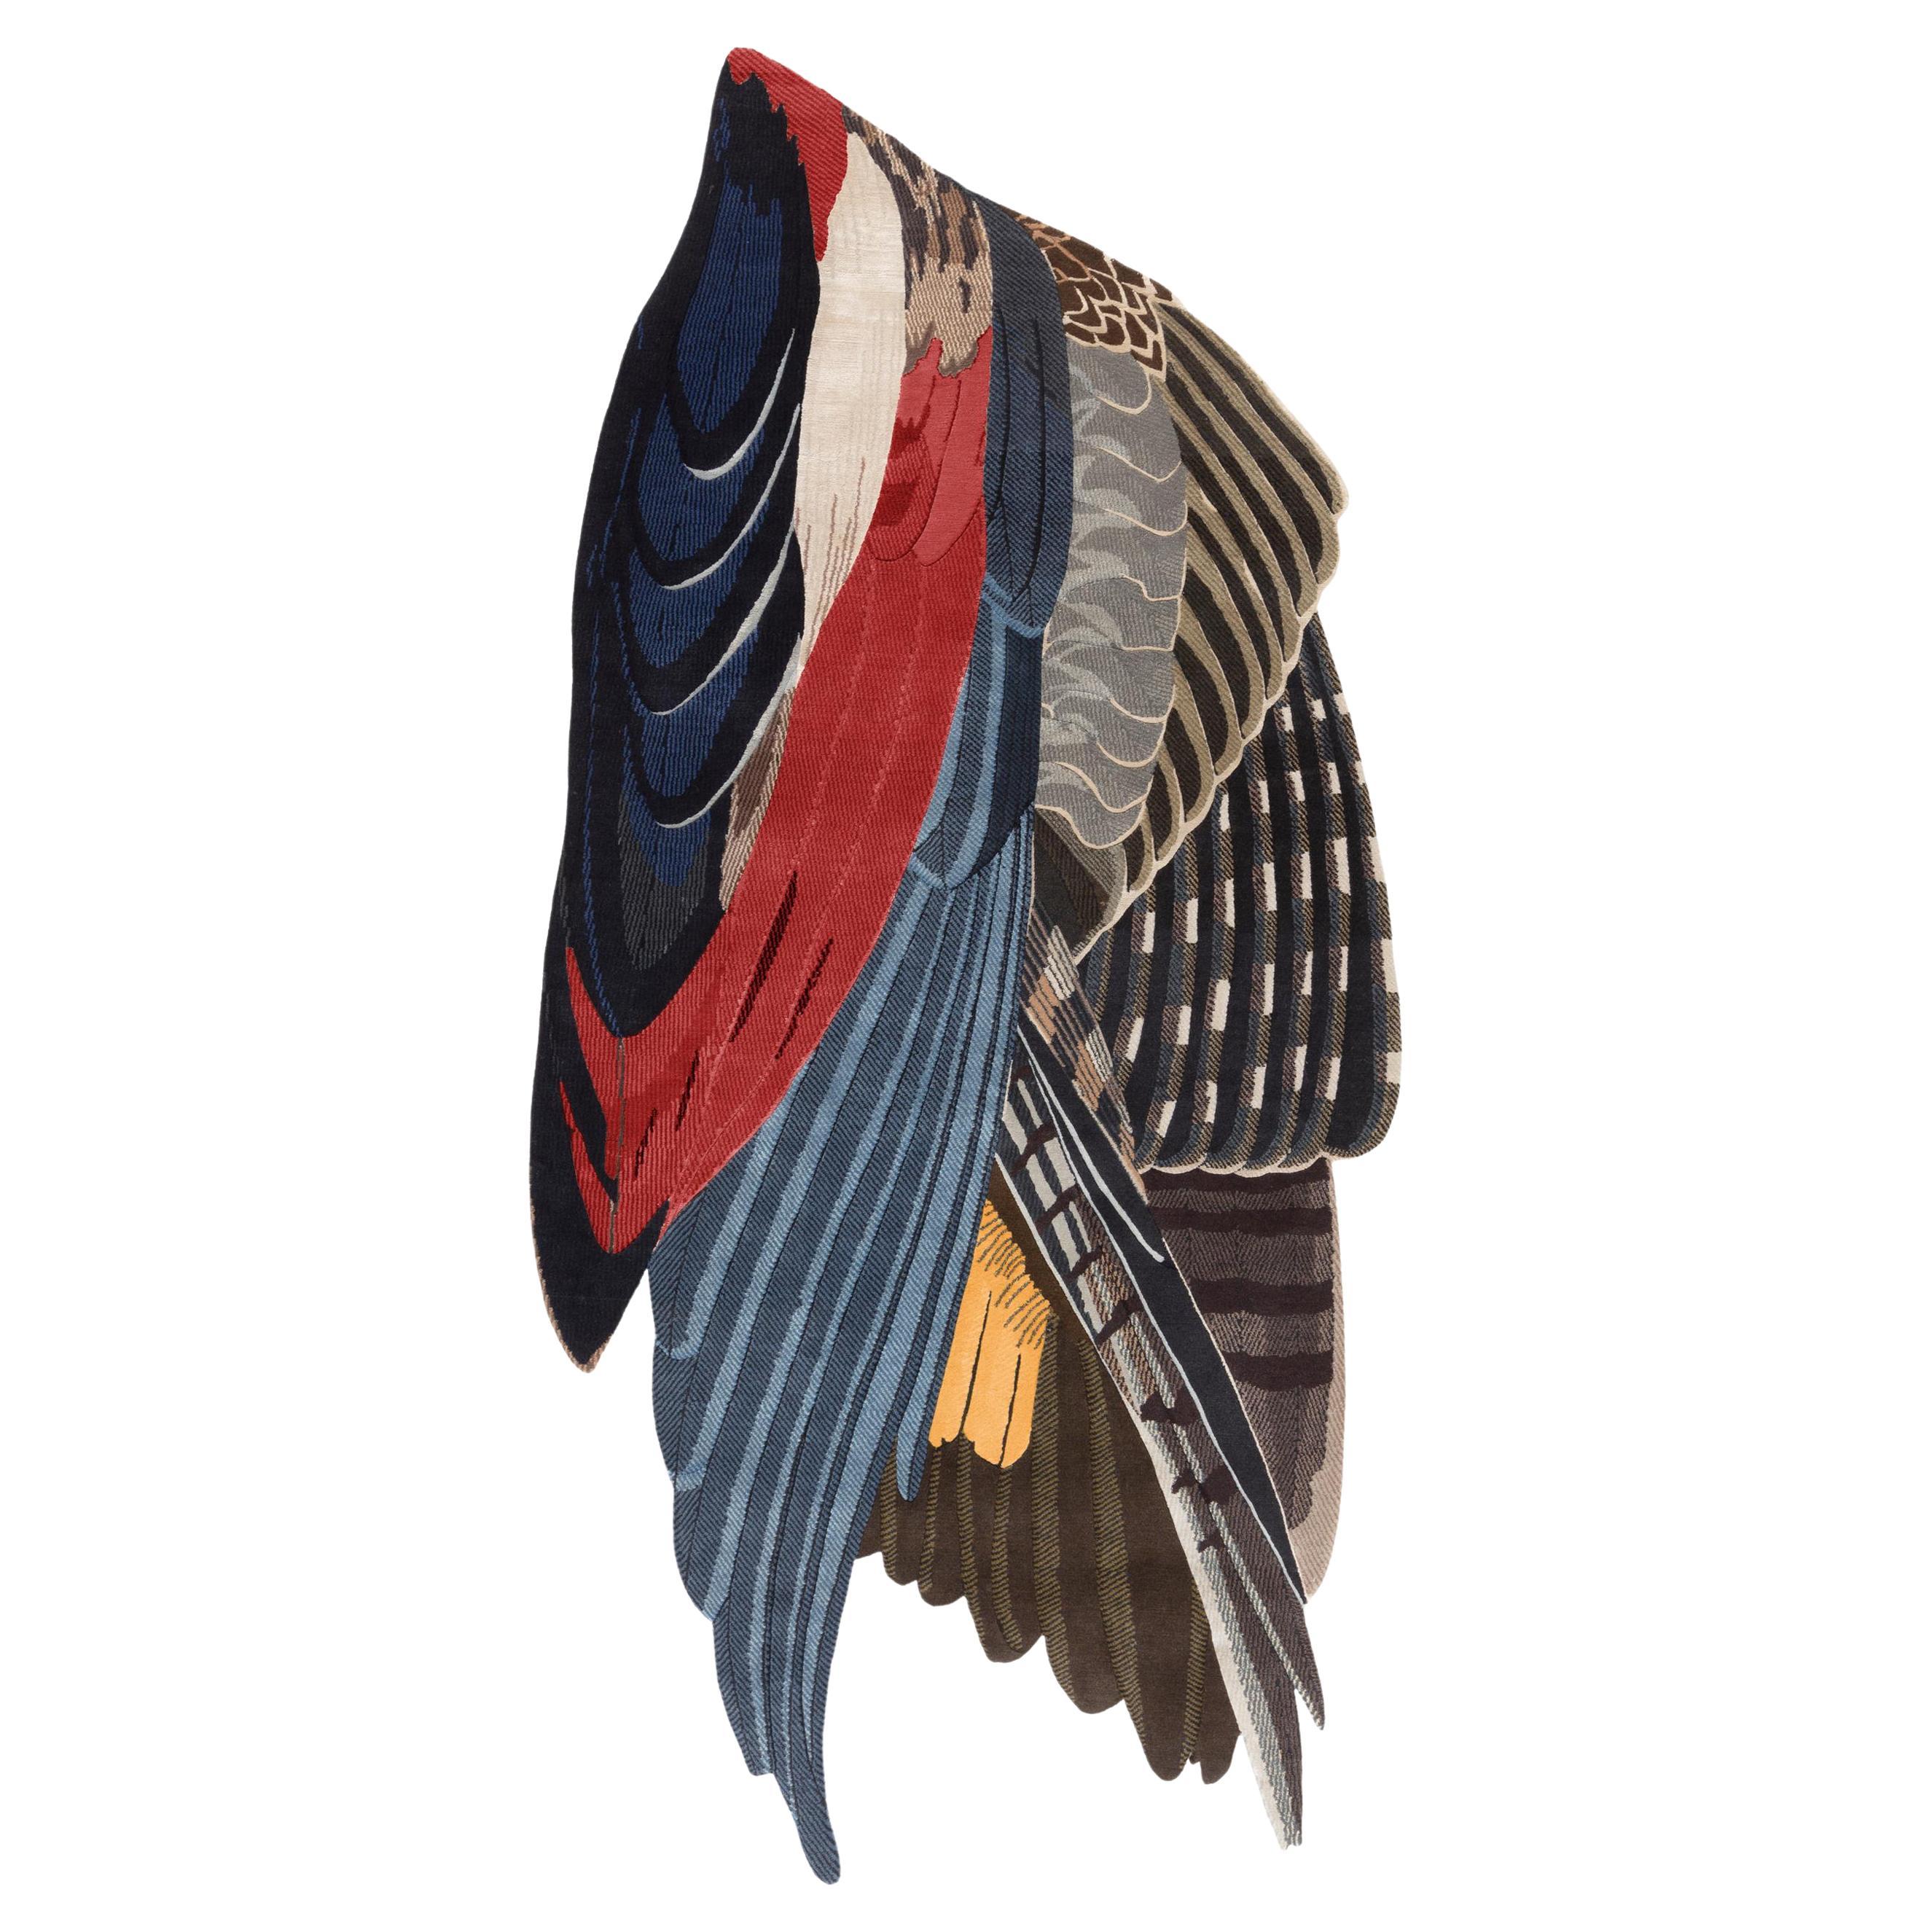 Grand tapis cc-tapis Feathers de forme libre de Maarten De Ceulaer